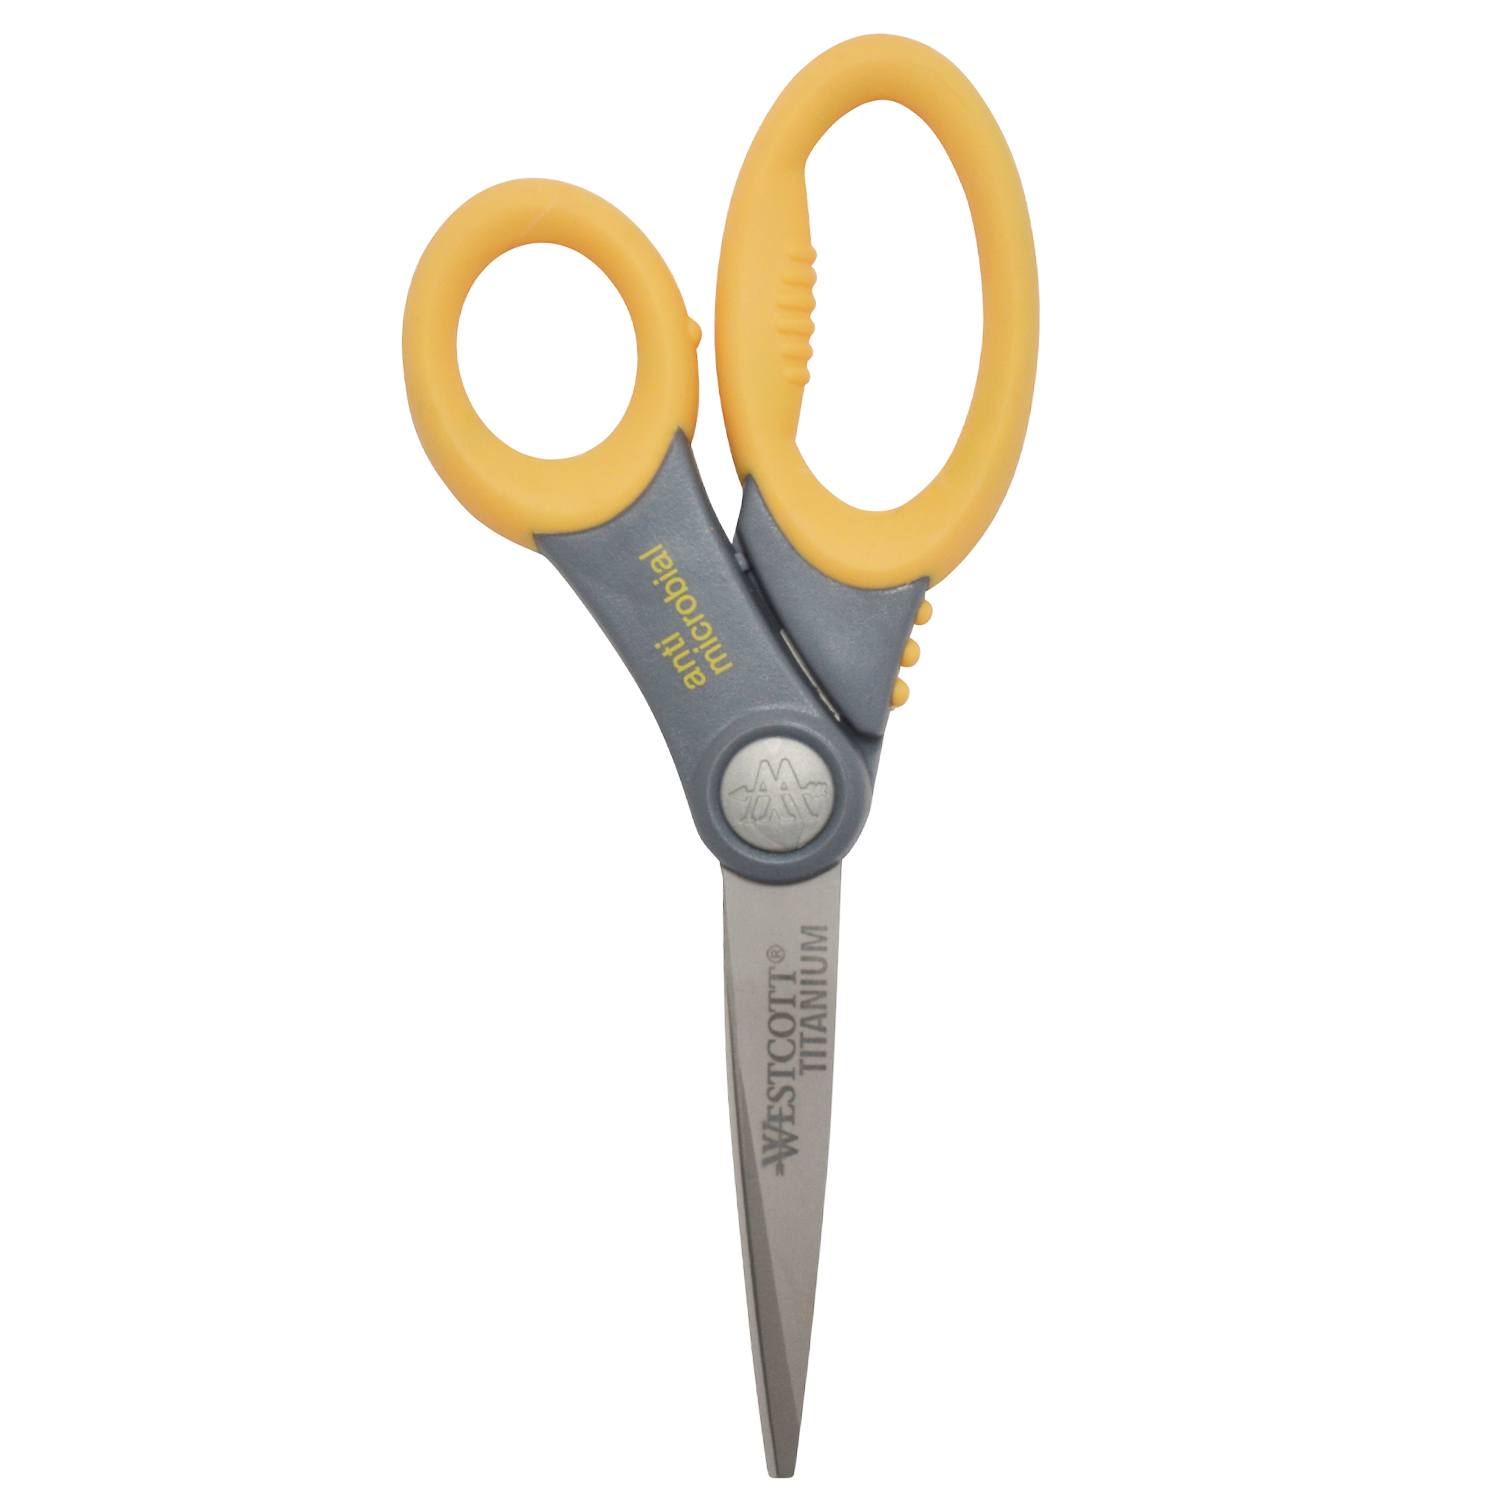 8" Titanium Bonded Scissors with Anti-Microbial Handles